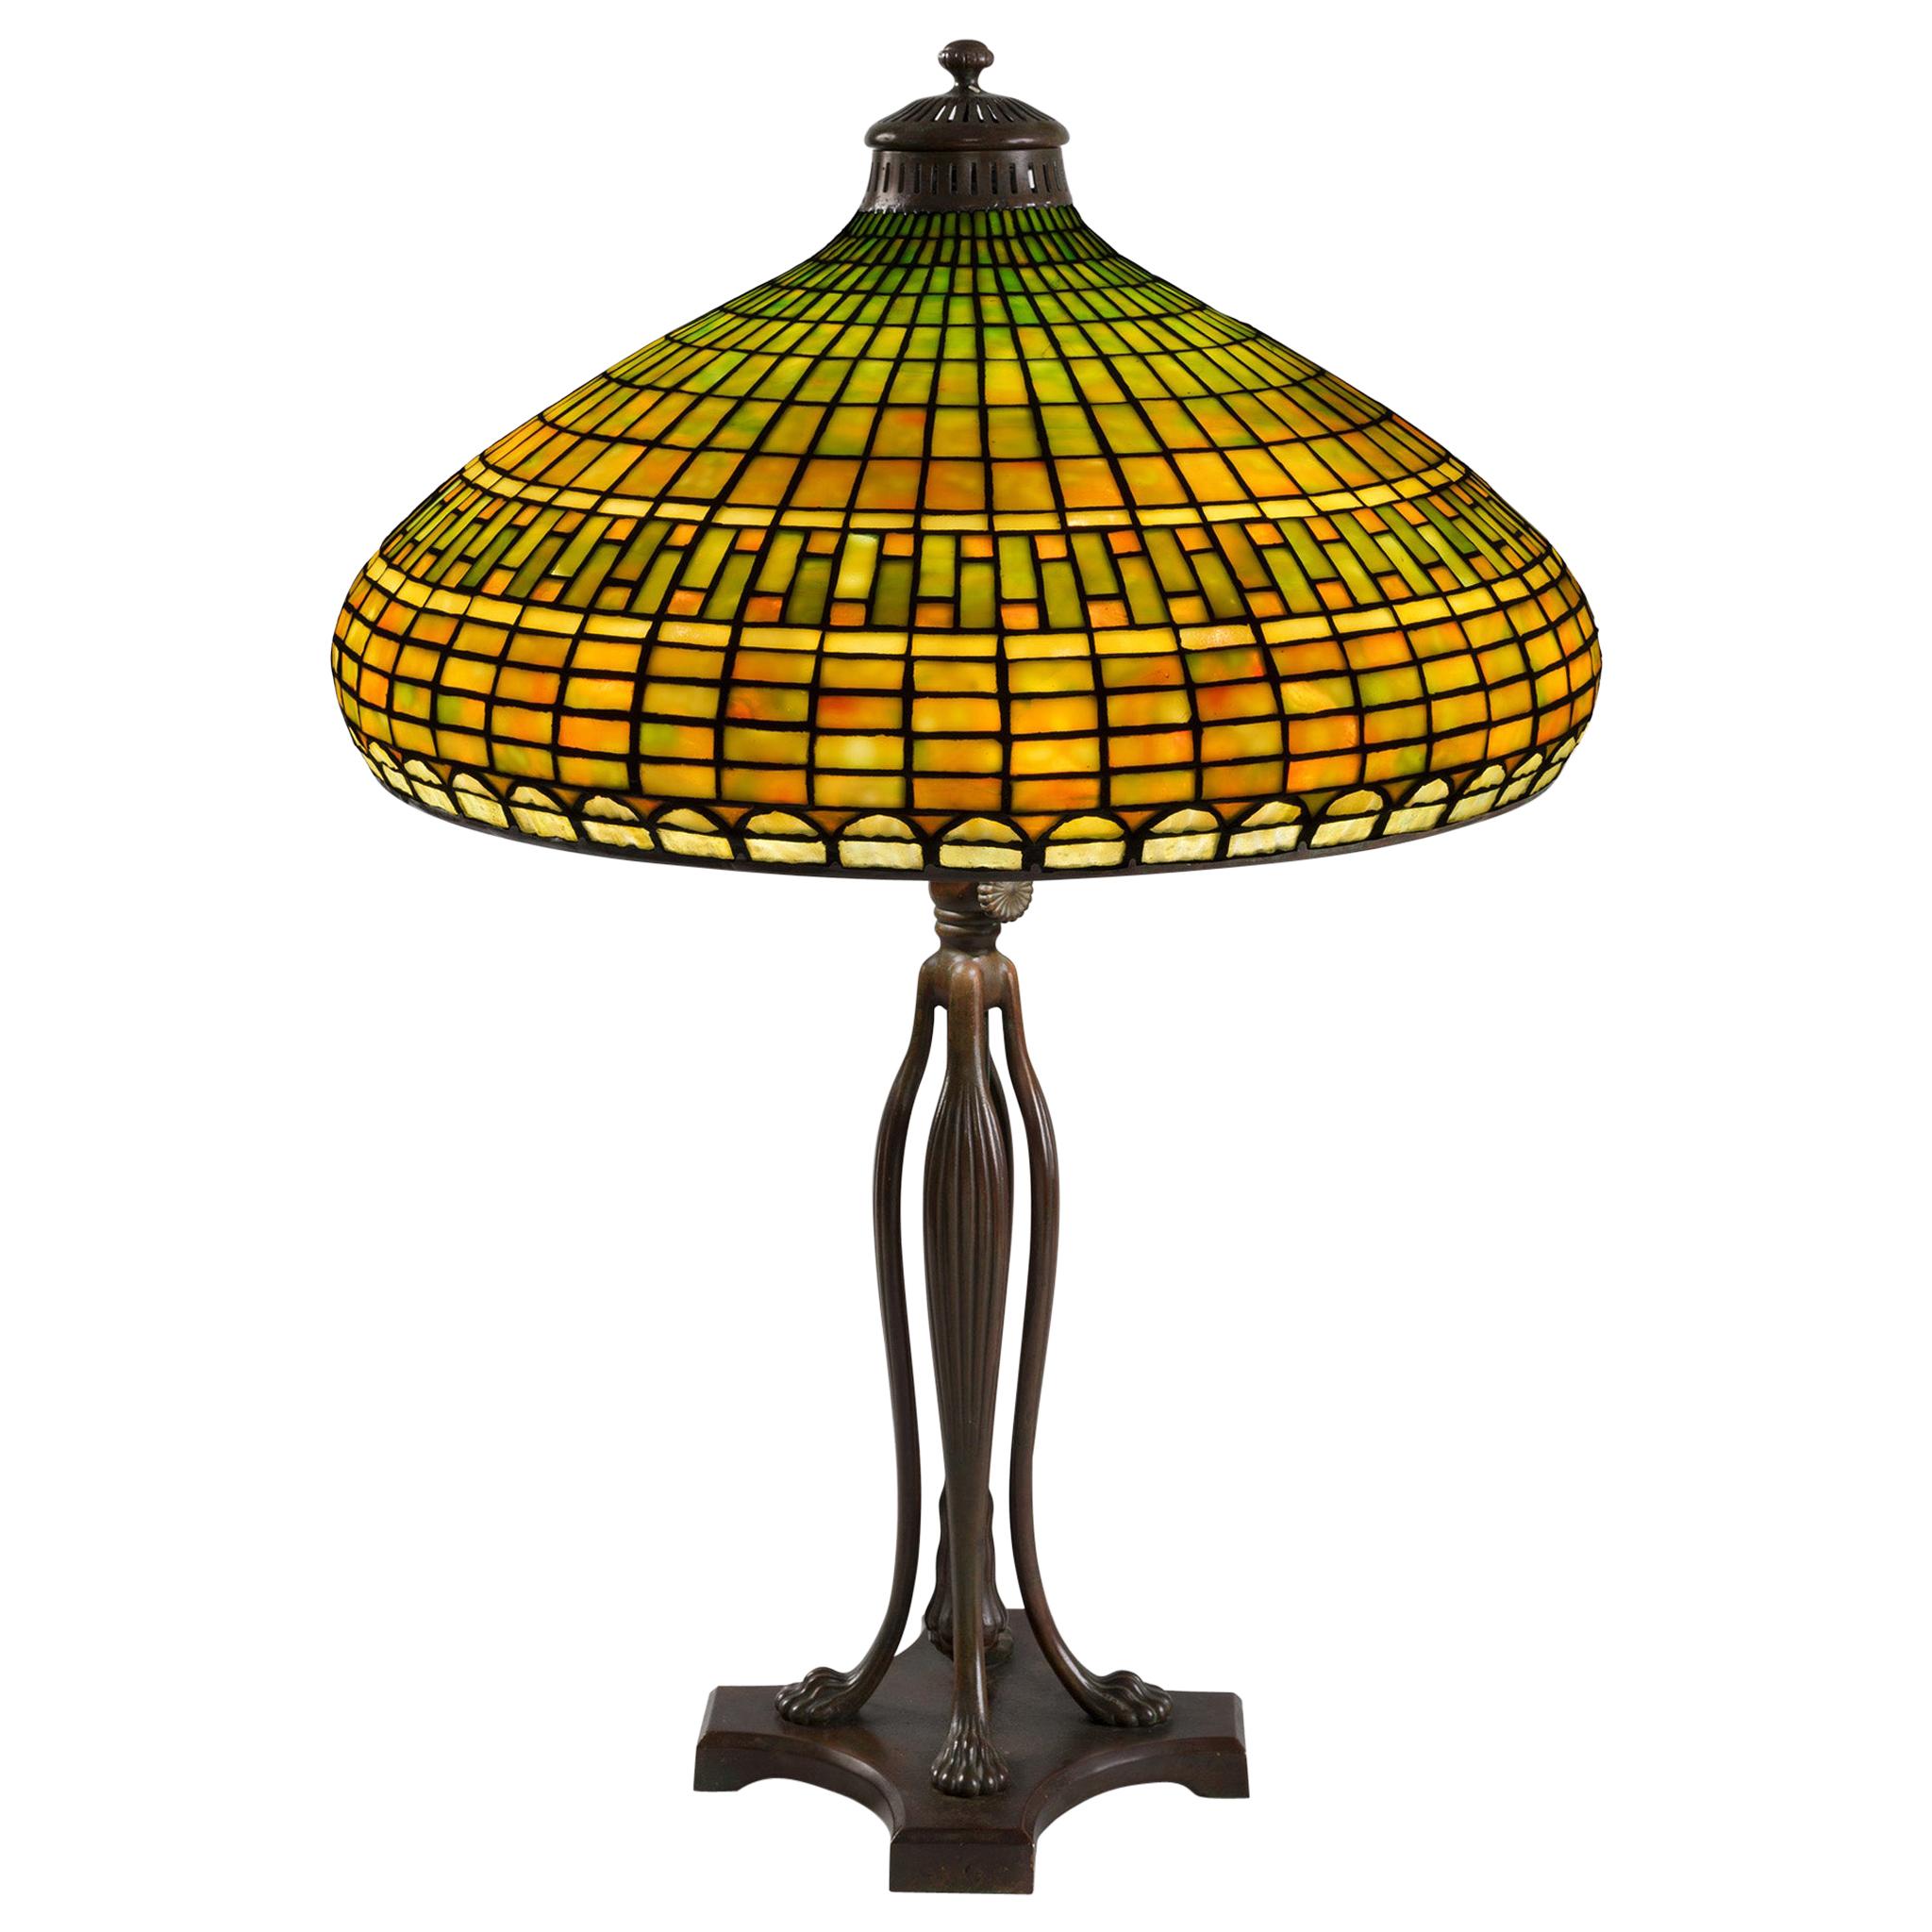 Tiffany Studios New York "Geometric" Table Lamp